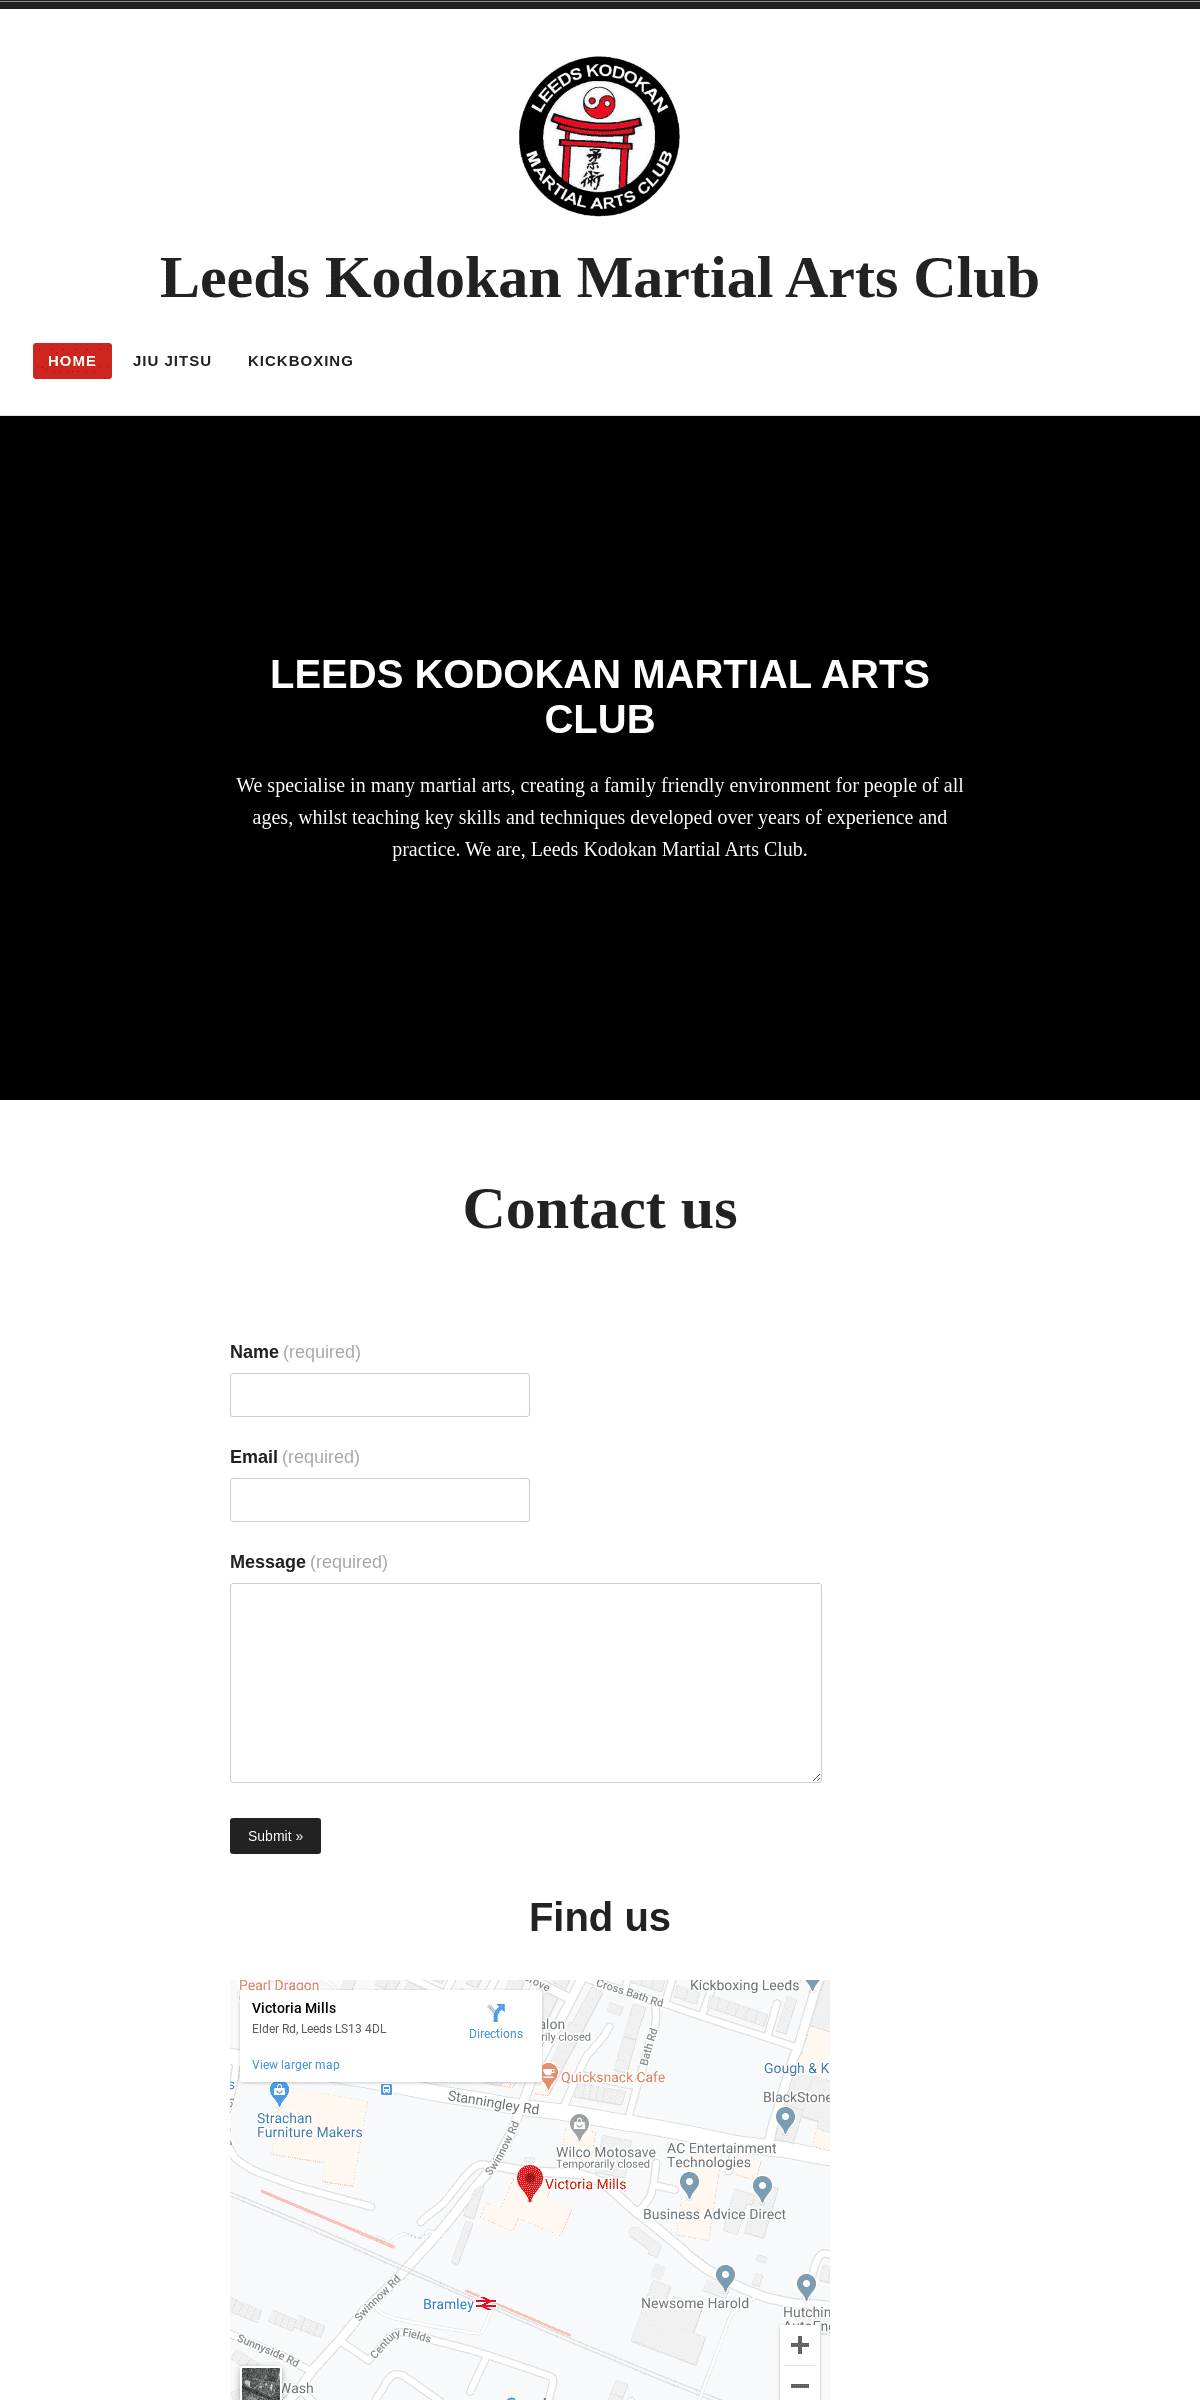 A complete backup of leedskodokan.com